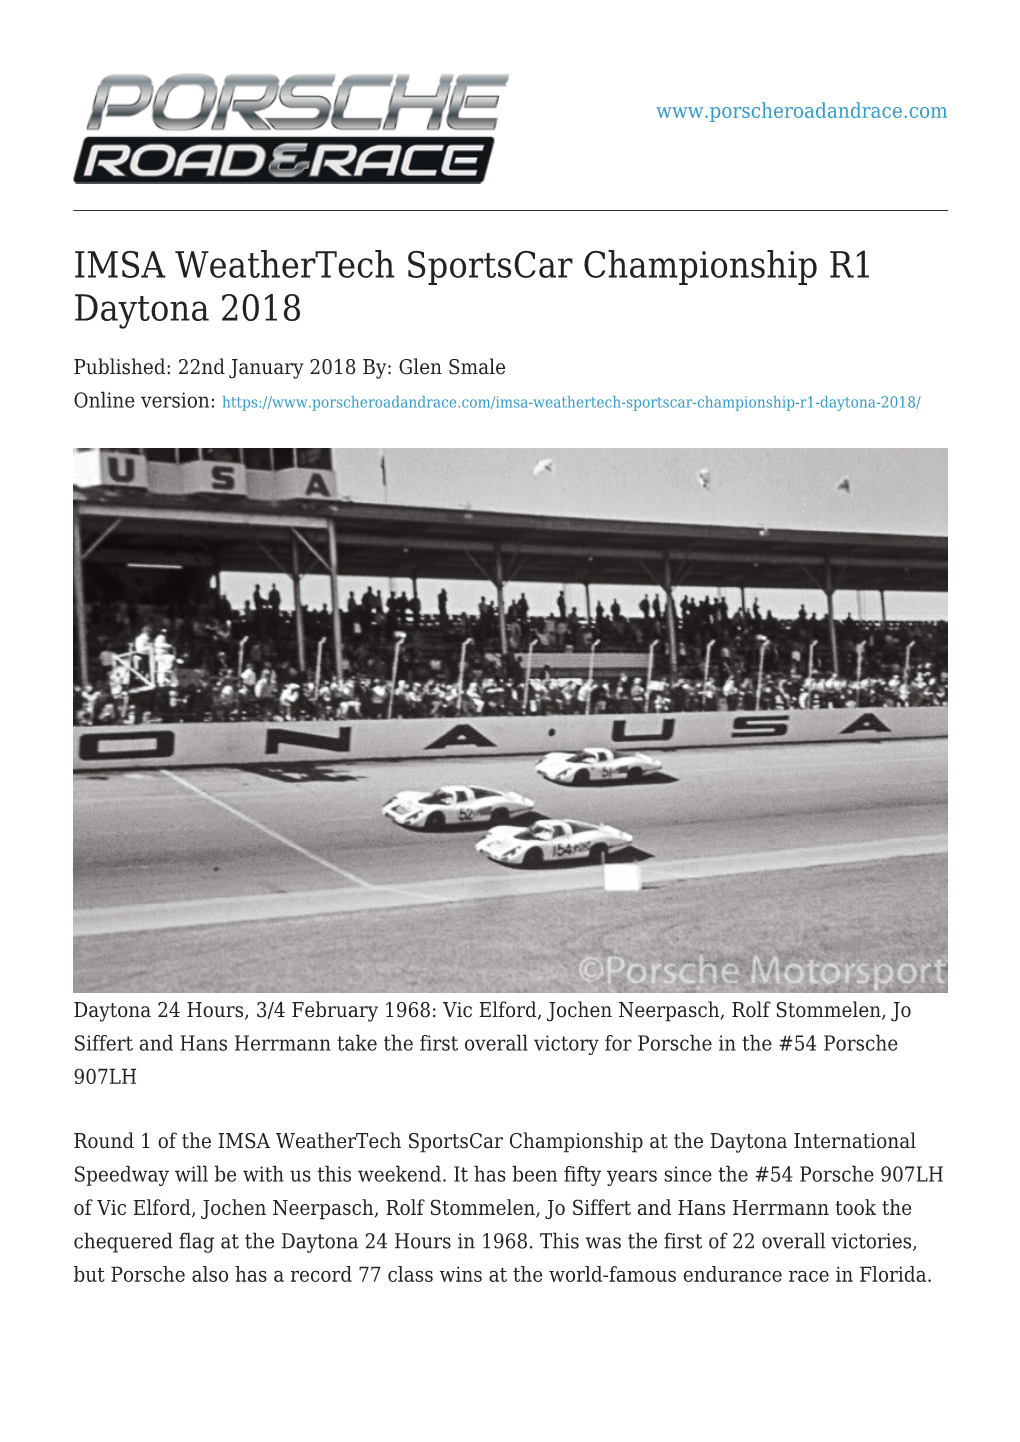 IMSA Weathertech Sportscar Championship R1 Daytona 2018